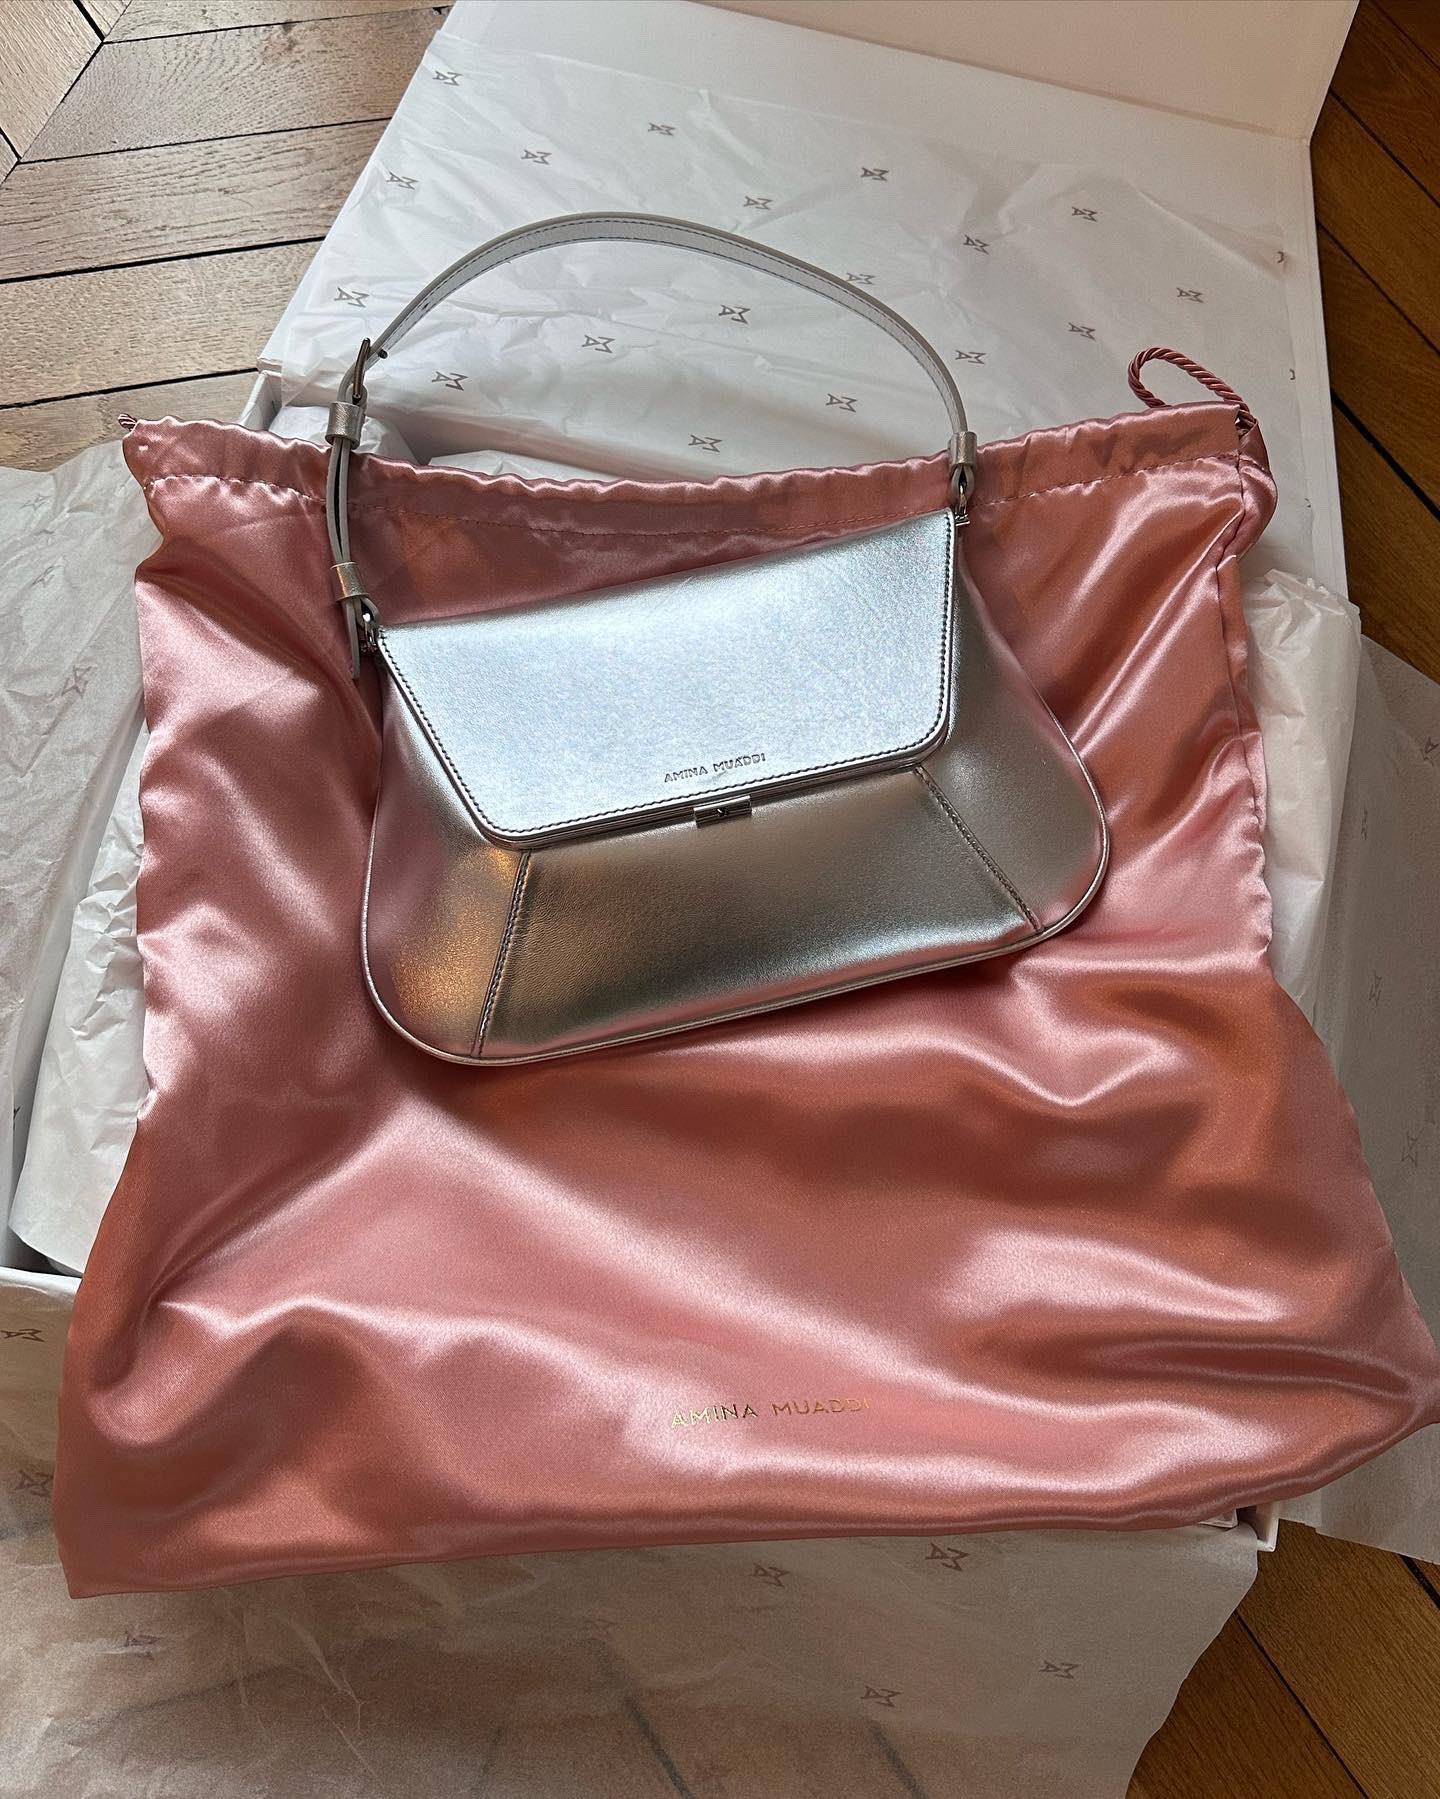 𝐒𝐀𝐅.🝮 on X: The new AMI handbag by Amina Muaddi reminds me of